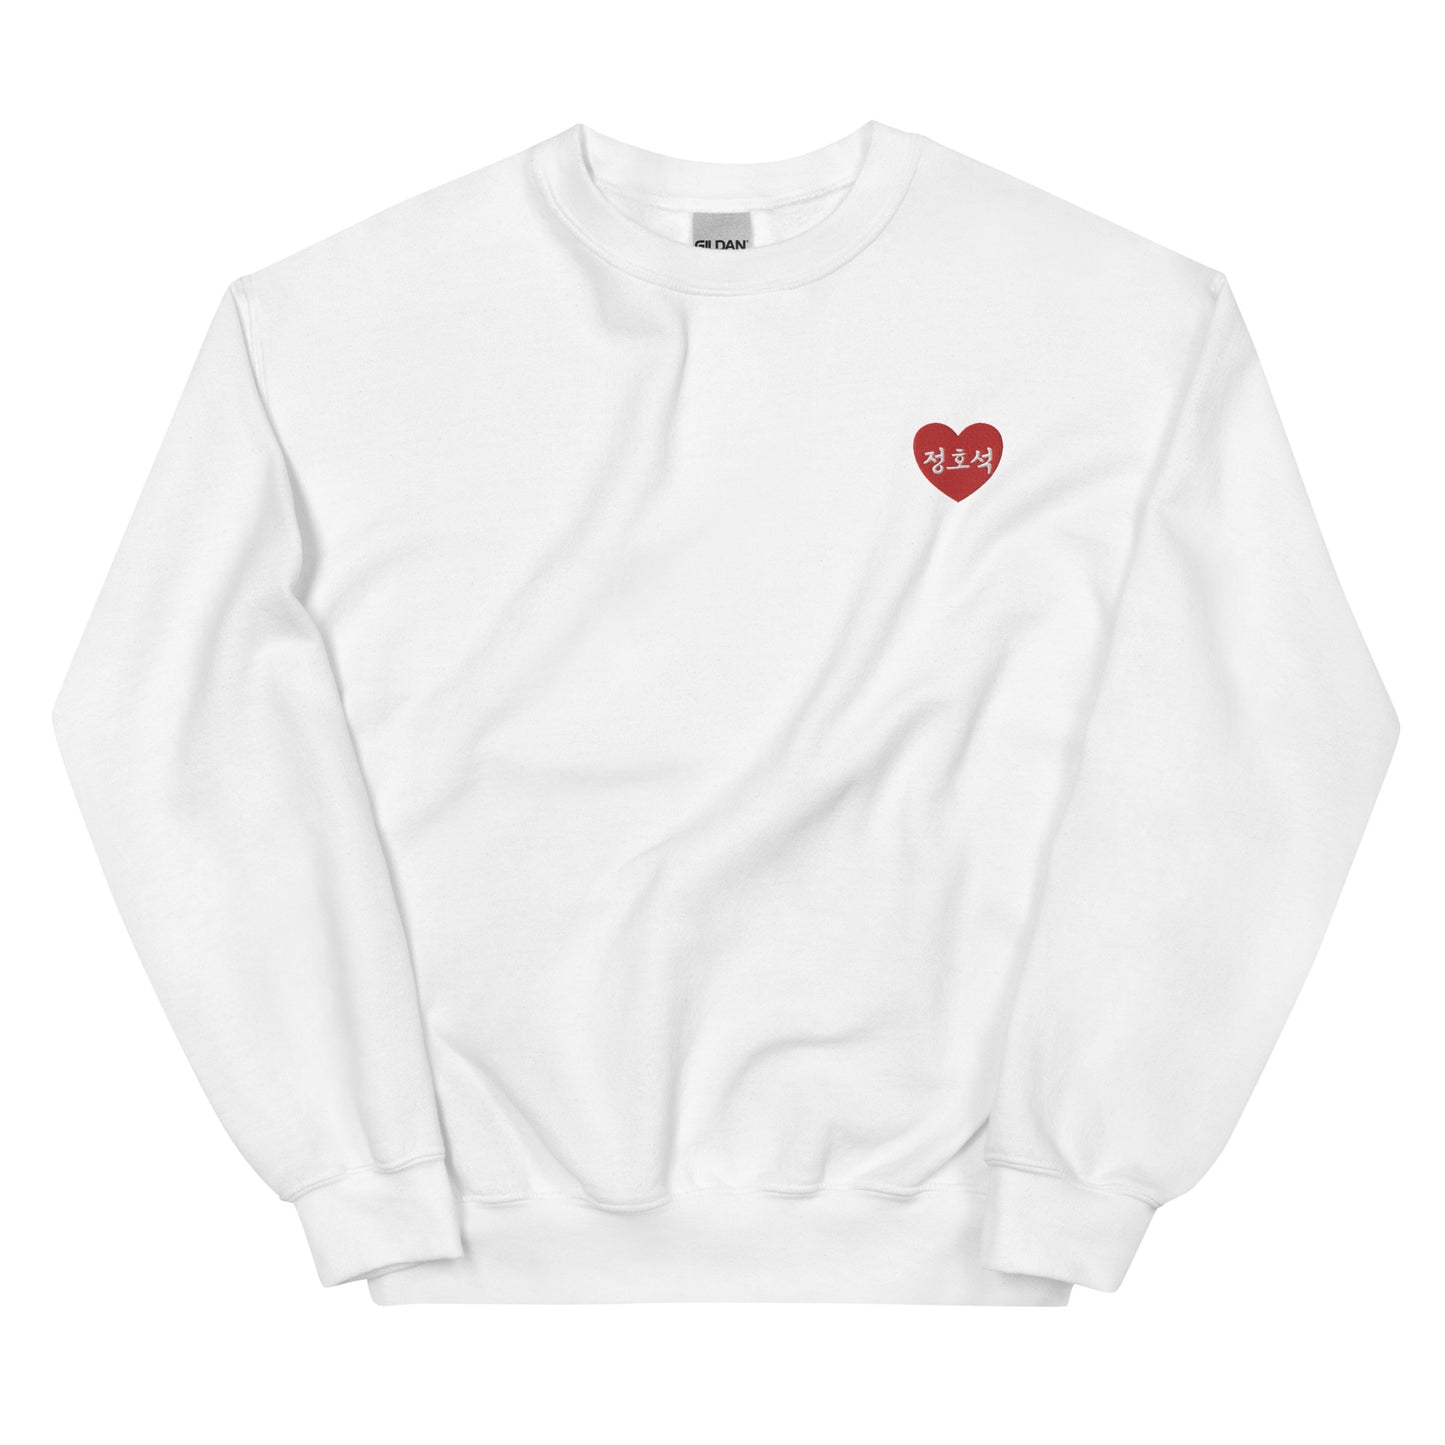 J-hope in Korean Kpop BTS Merch Embroidery Unisex Sweatshirt